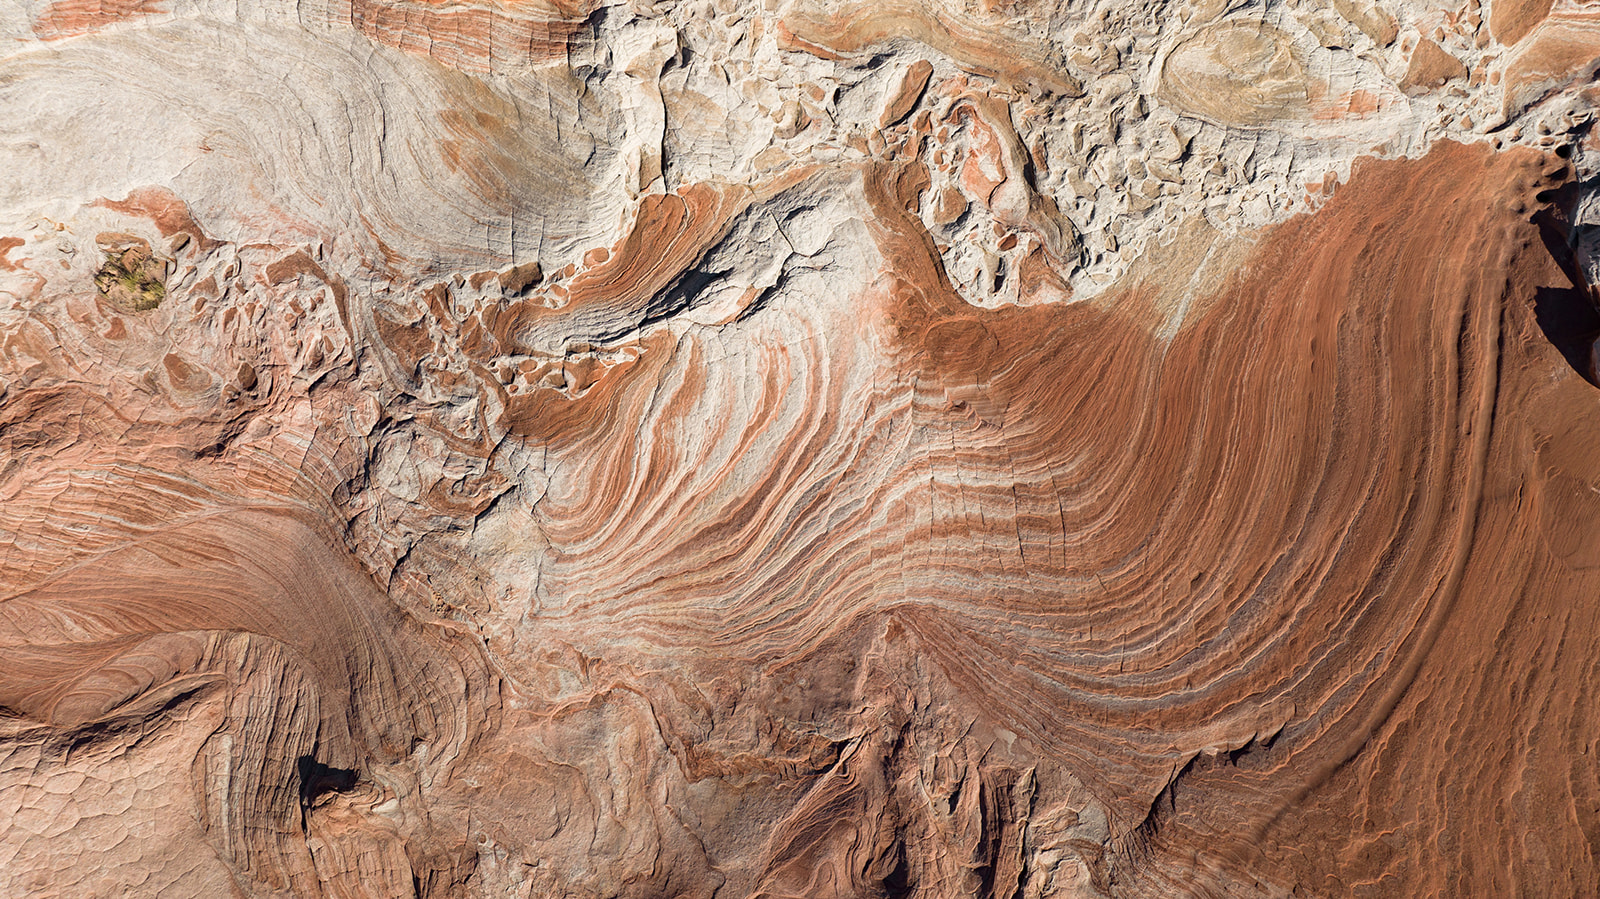 sandstone wave formations at white pocket arizona